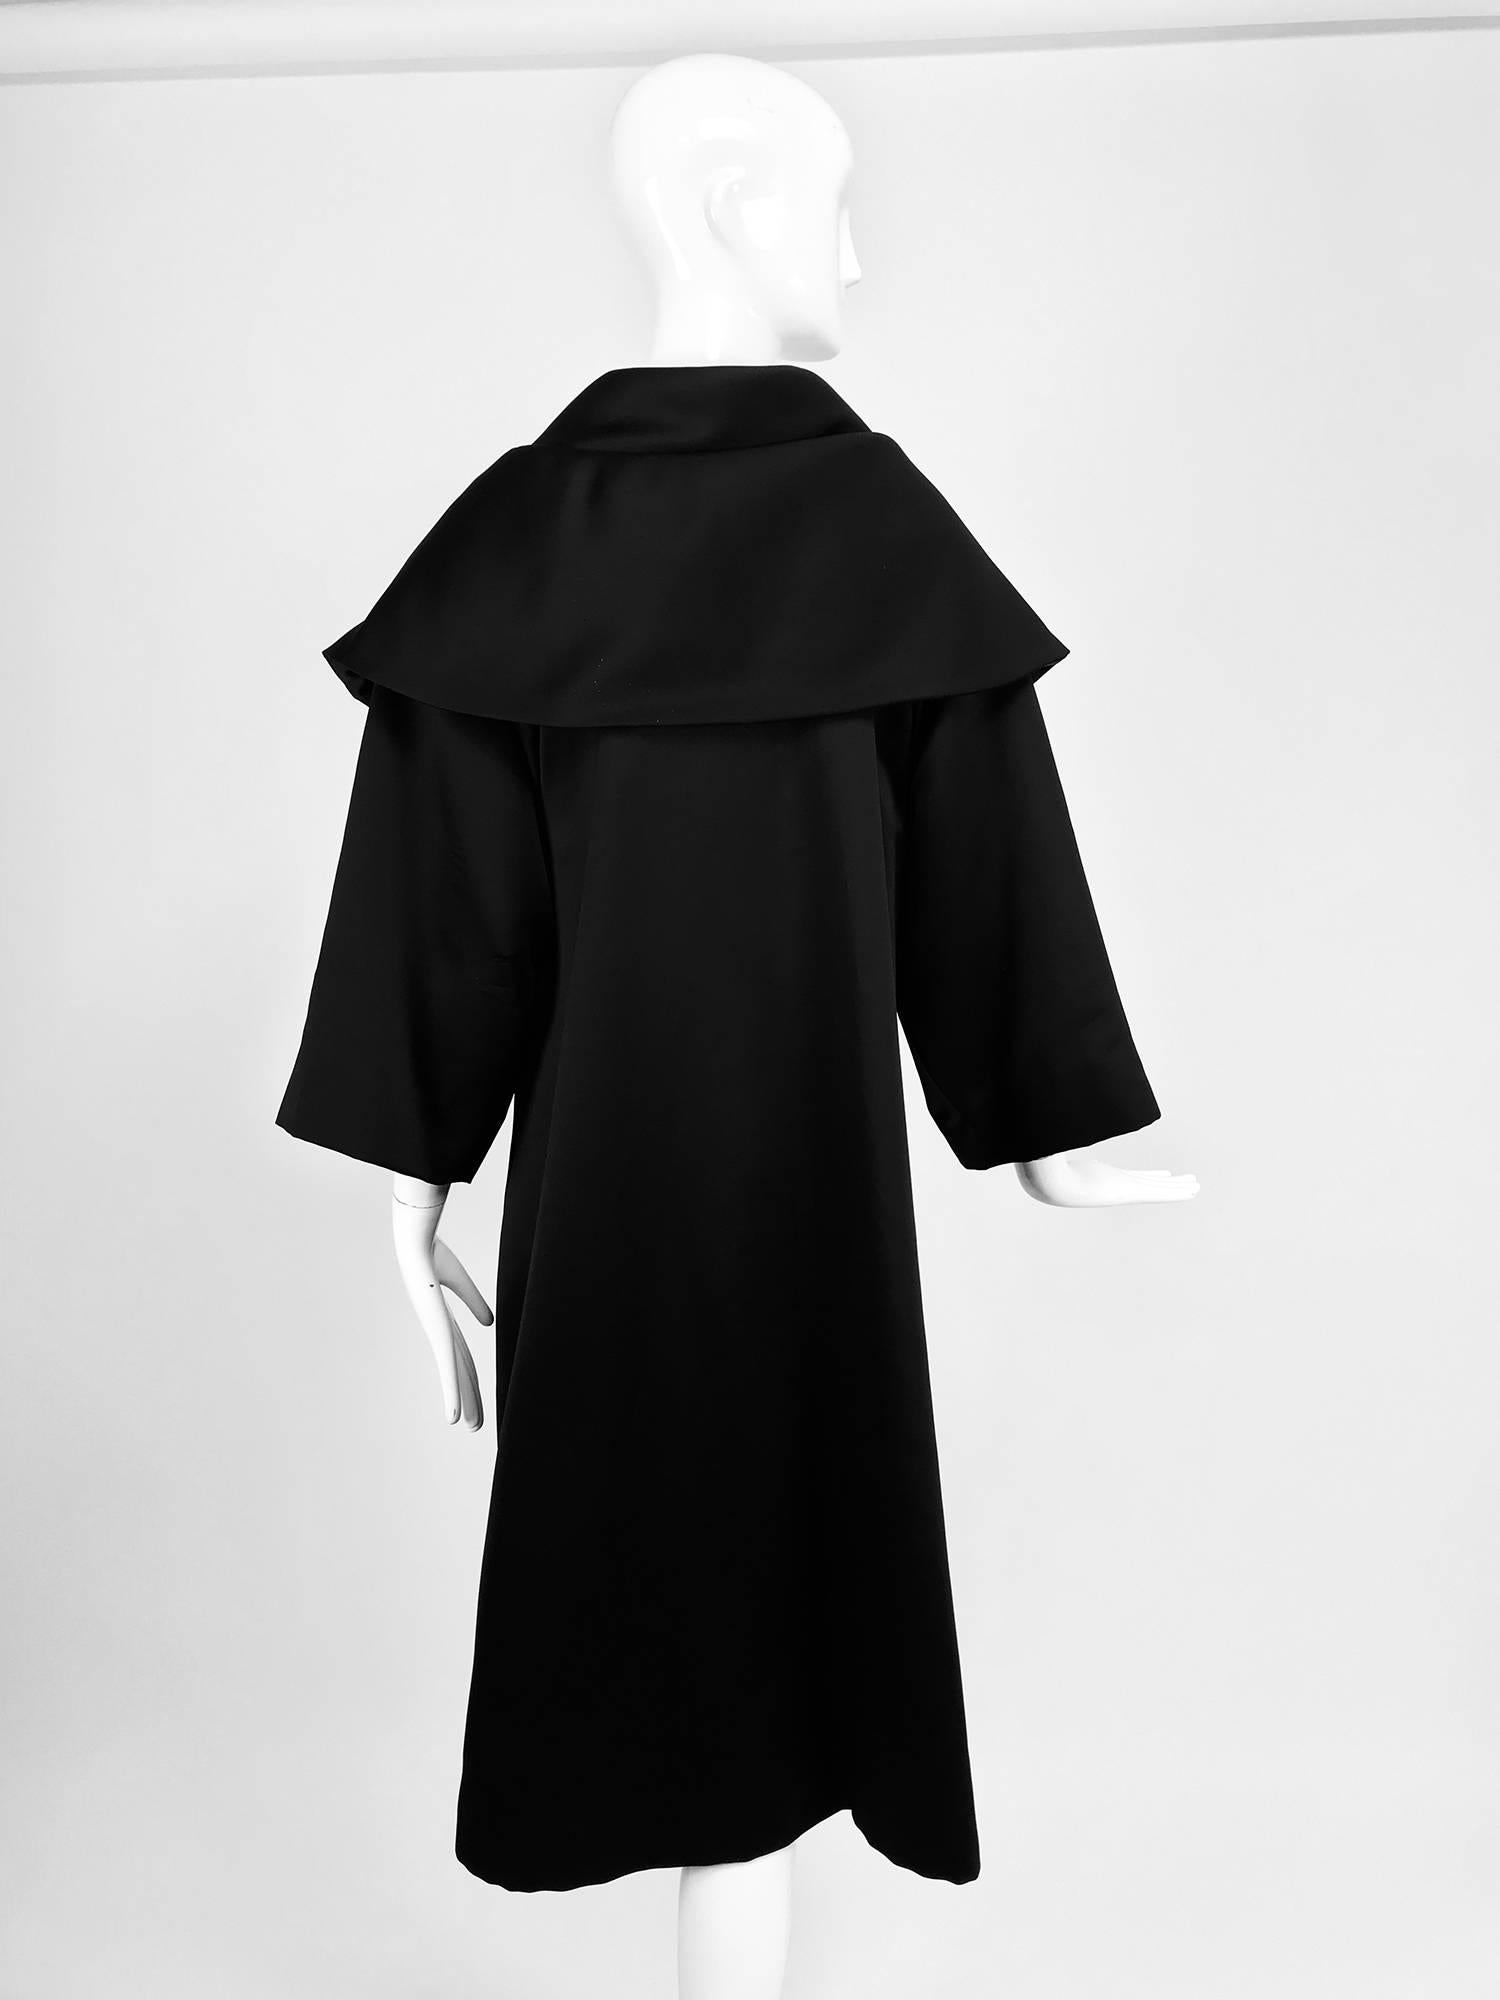 Women's Carol Mignon Boutique Black Portrait collar jewel evening coat 1980s